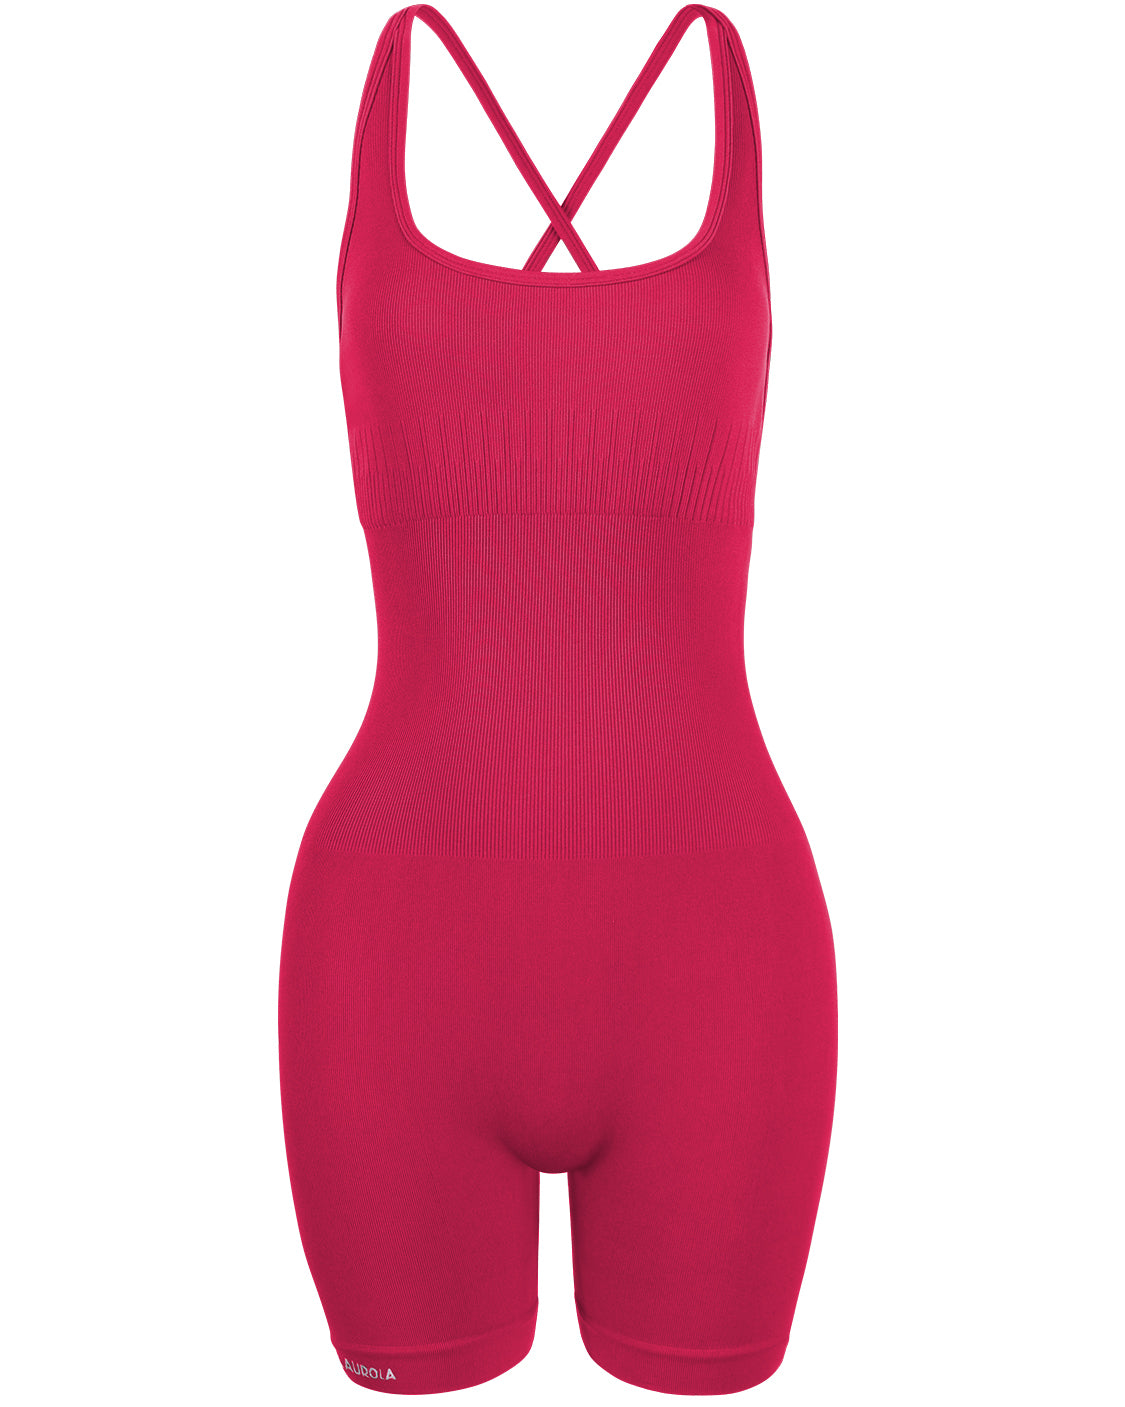 Buy AUROLA Strapy Romper for Women Workout Yoga Gym Seamless One Piece  Jumpsuit Tummy Control Padded Sports Bra, Black, Medium at